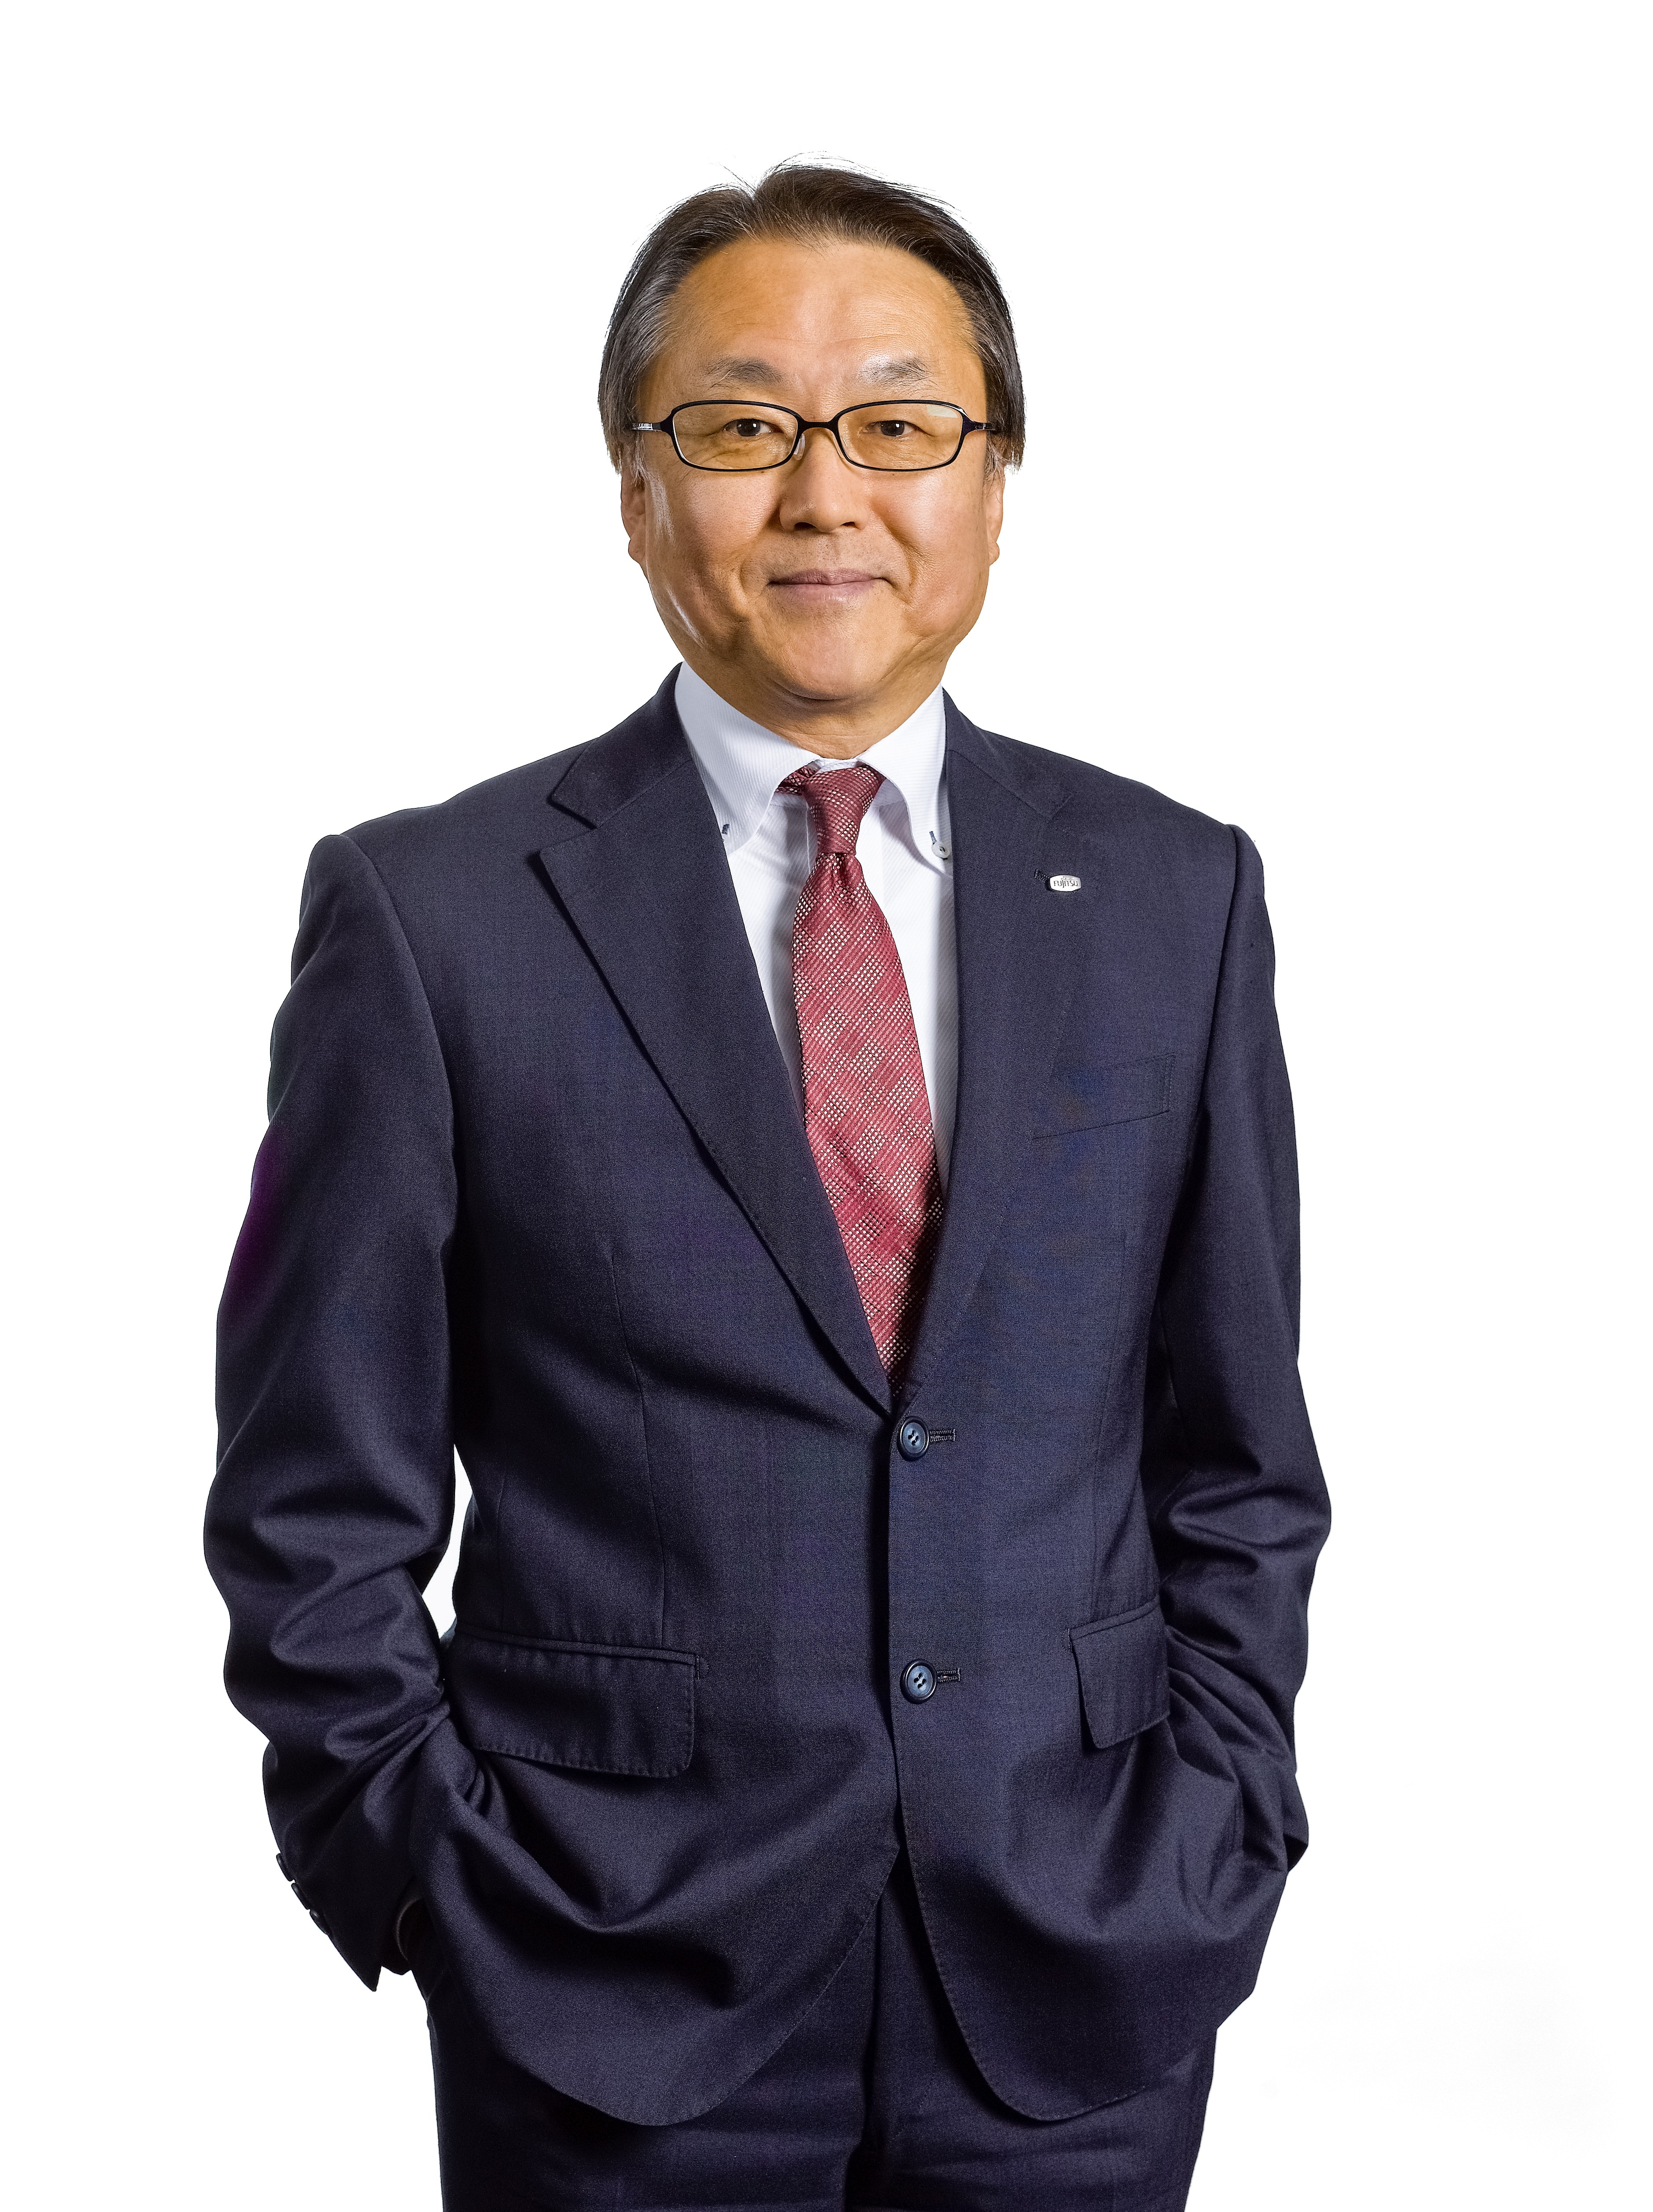 Motohiko Uno, president